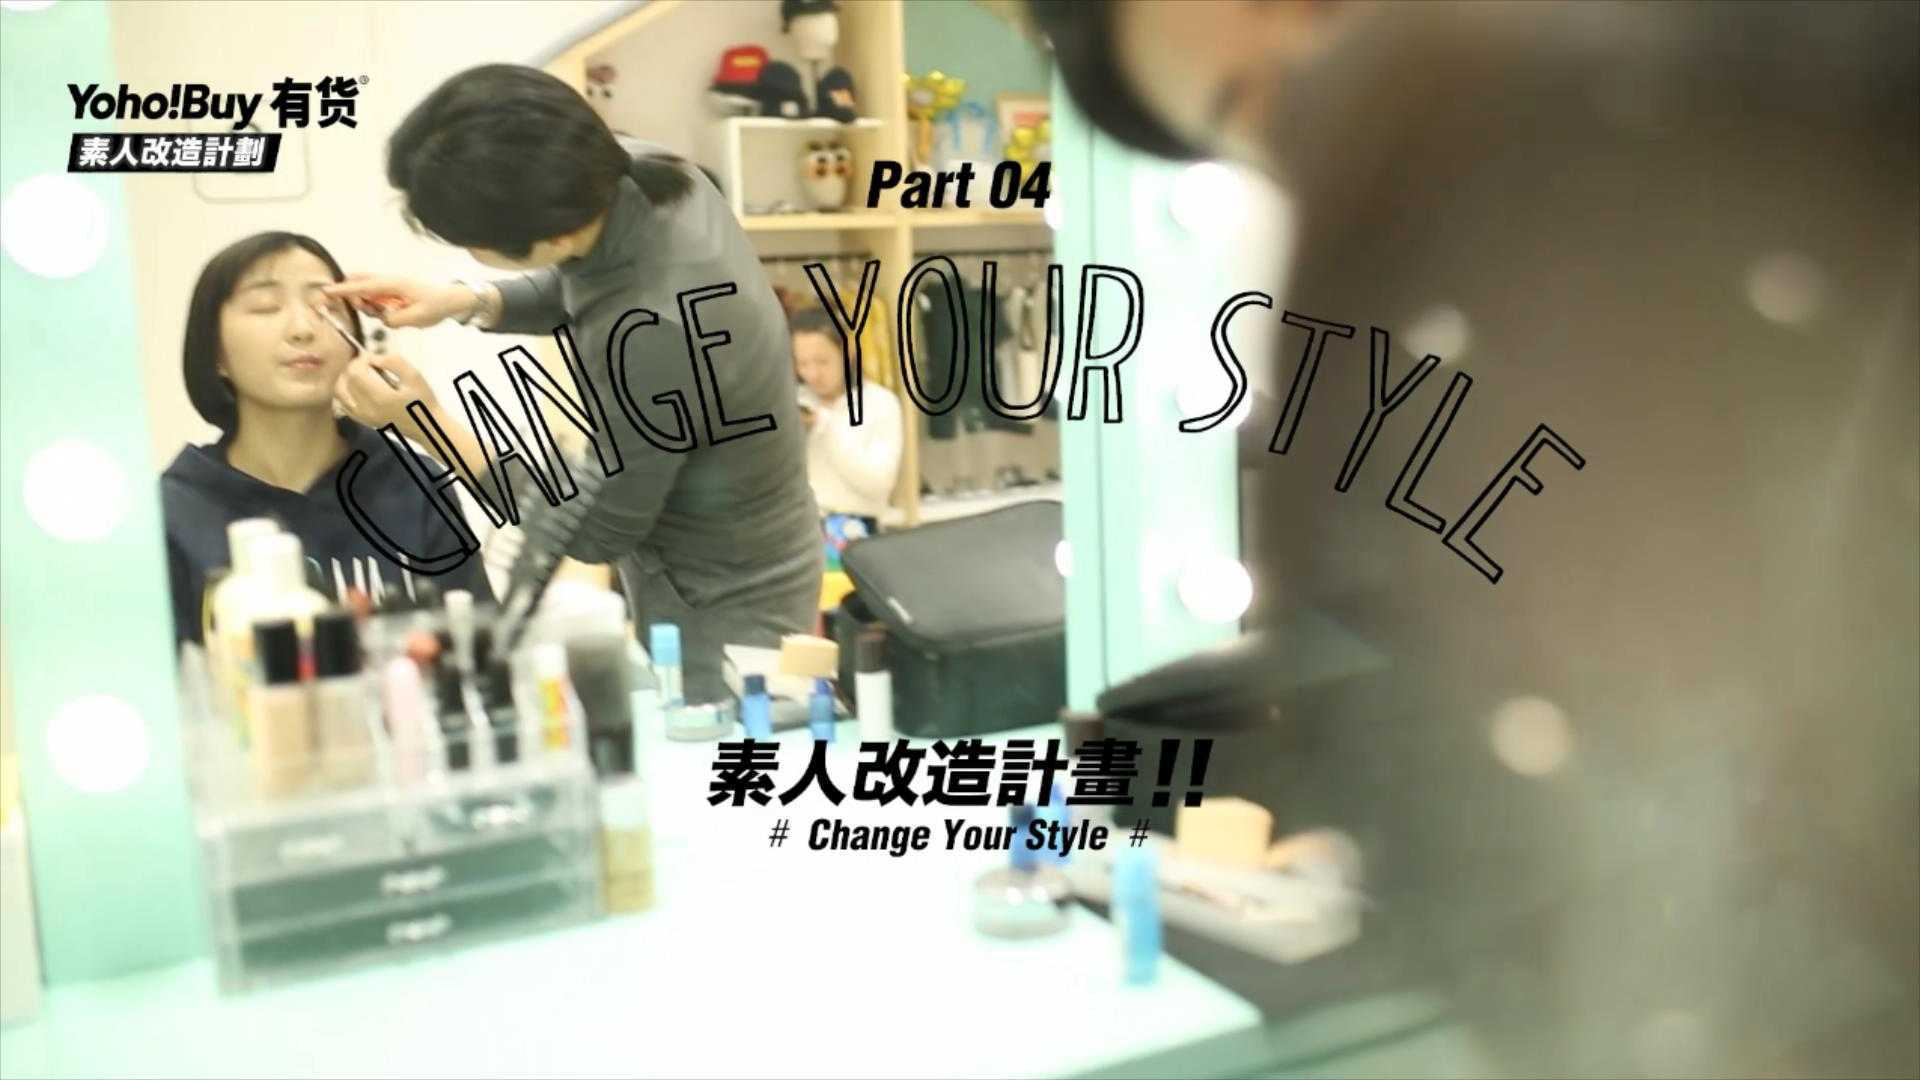 Yoho!Buy有货丨“素人改造”之Cici风格改变计划 2018.03宣传片